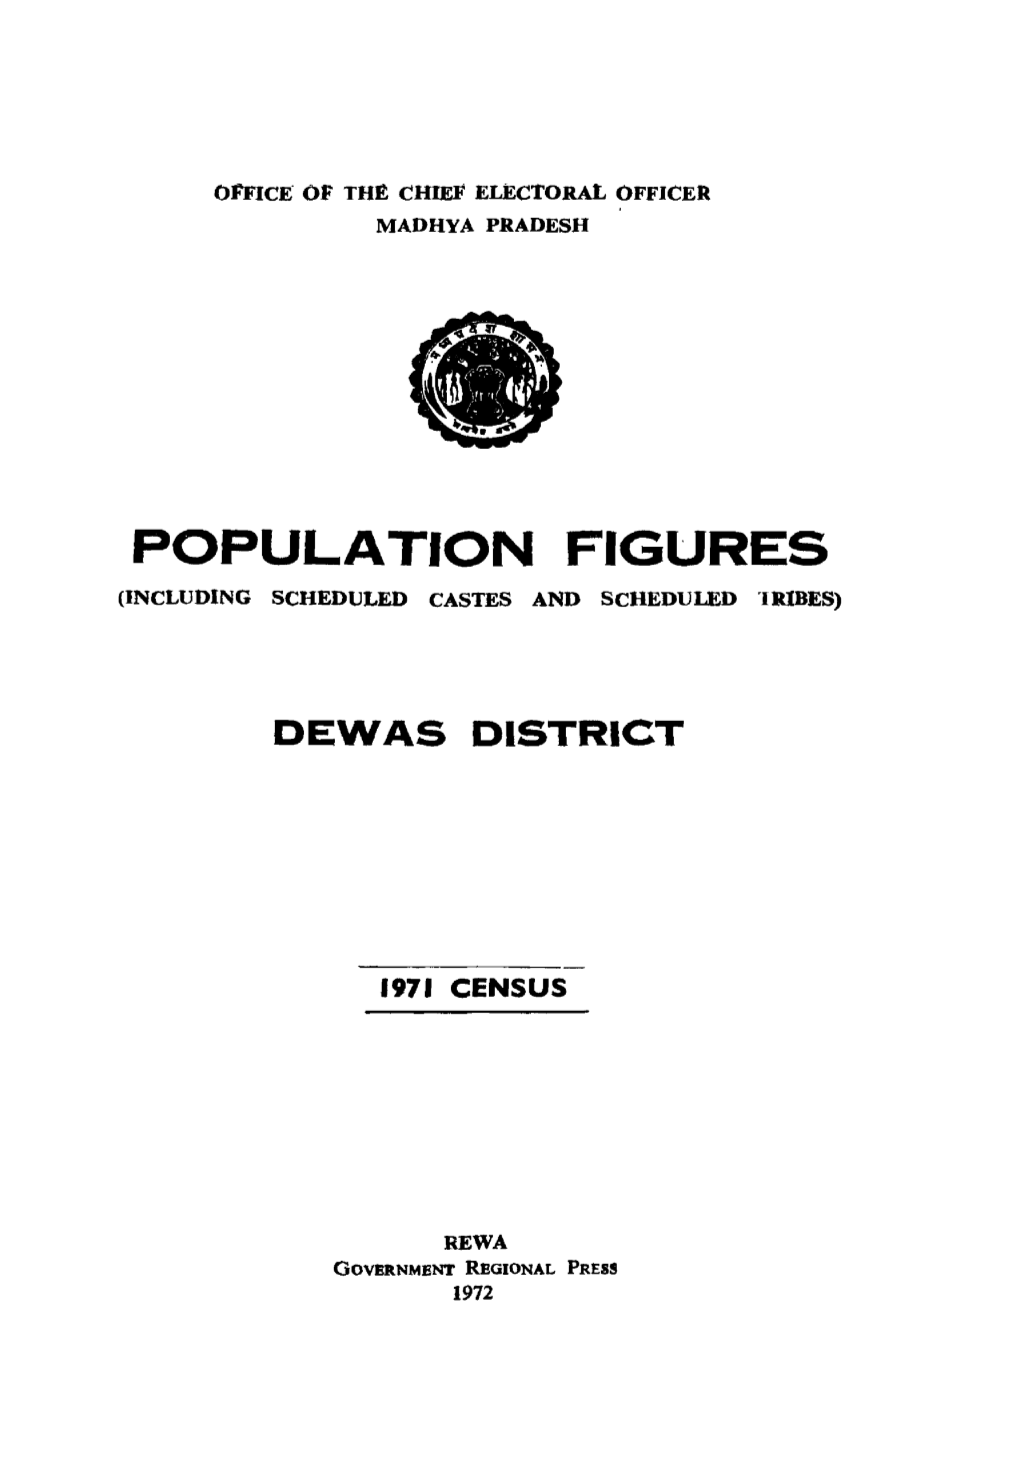 Population Figures, Dewas